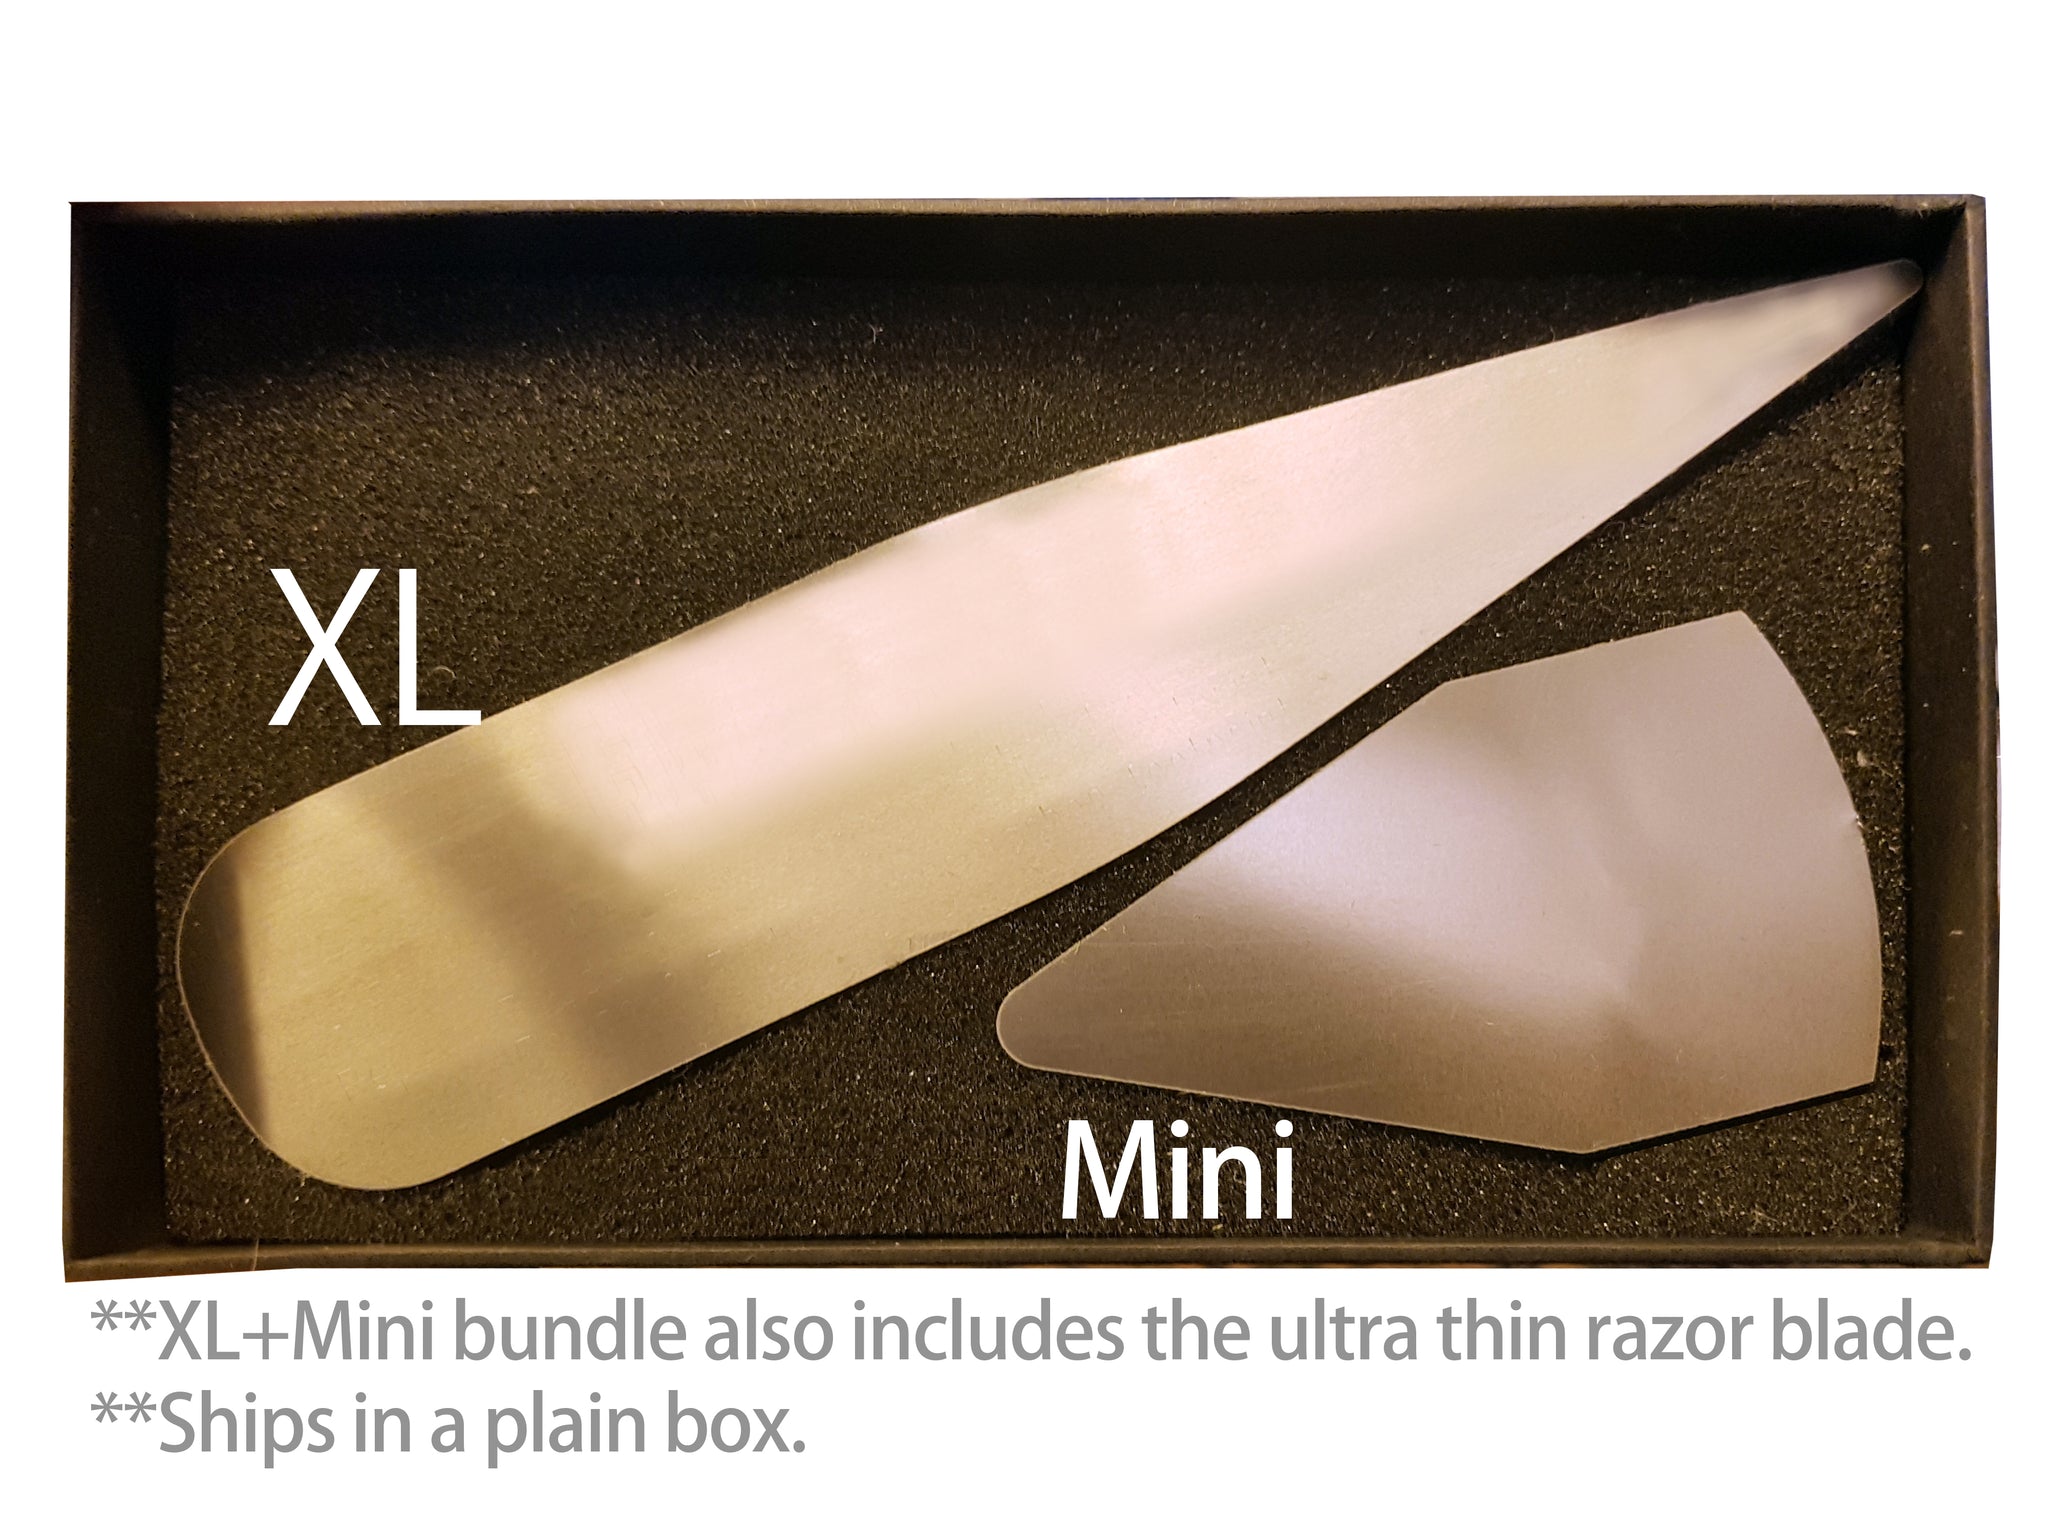 OCA Blade™ - Patent pending flexible metal glass removing tool